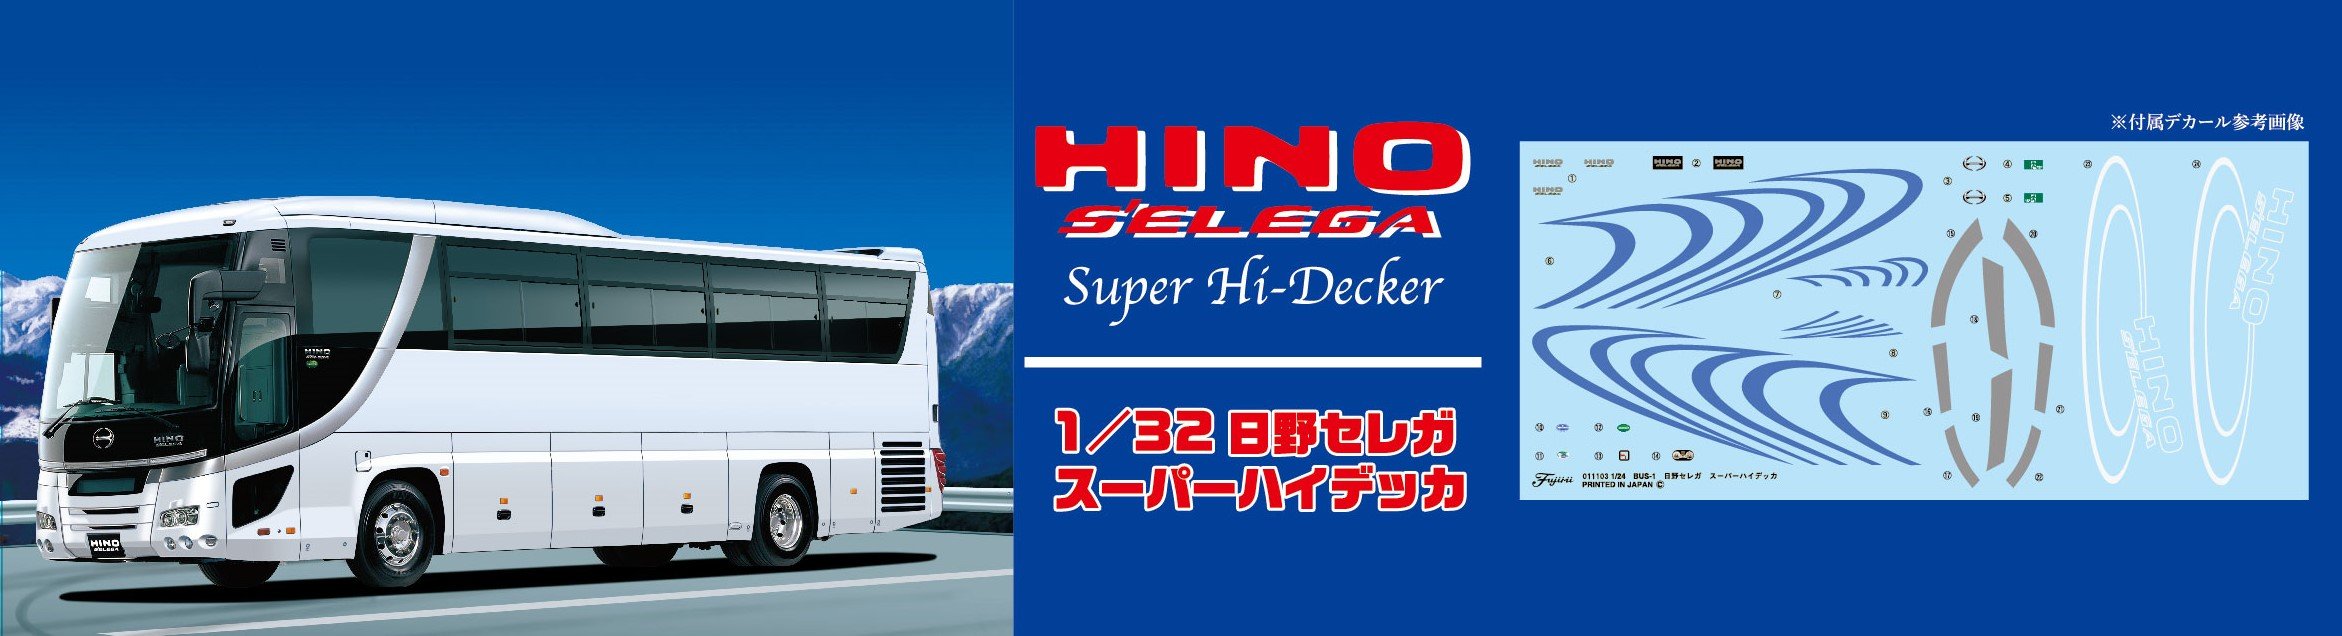 Fujimi 011103 Hino S'elega Super Hight Decker 1/32 Japanese Scale Bus Model Kit